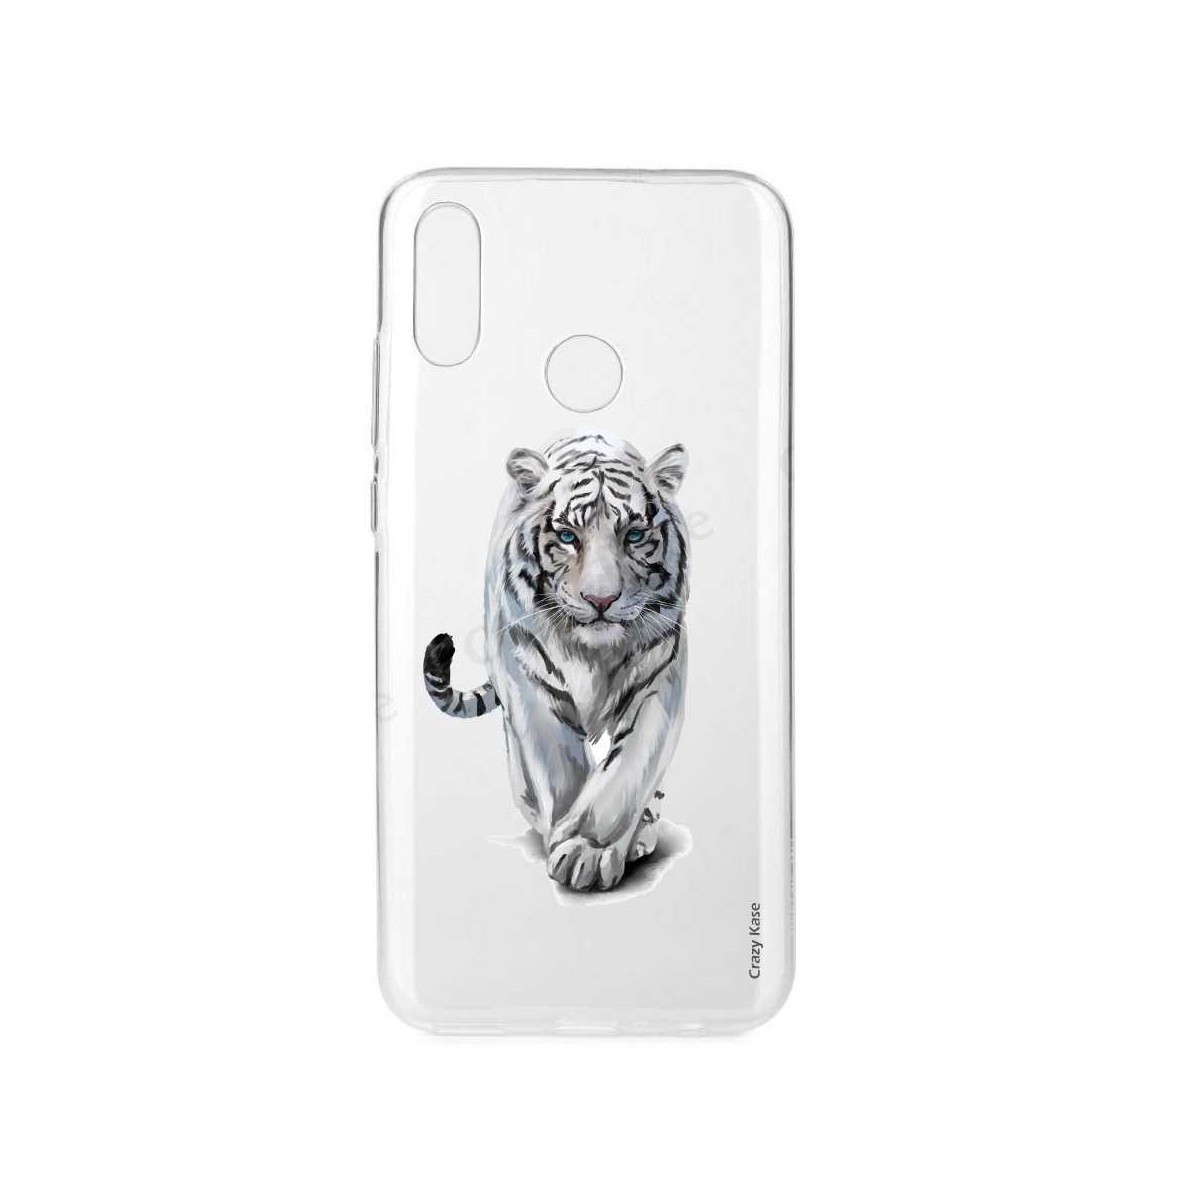 Coque Huawei P Smart 2019 souple Tigre blanc  - Crazy Kase